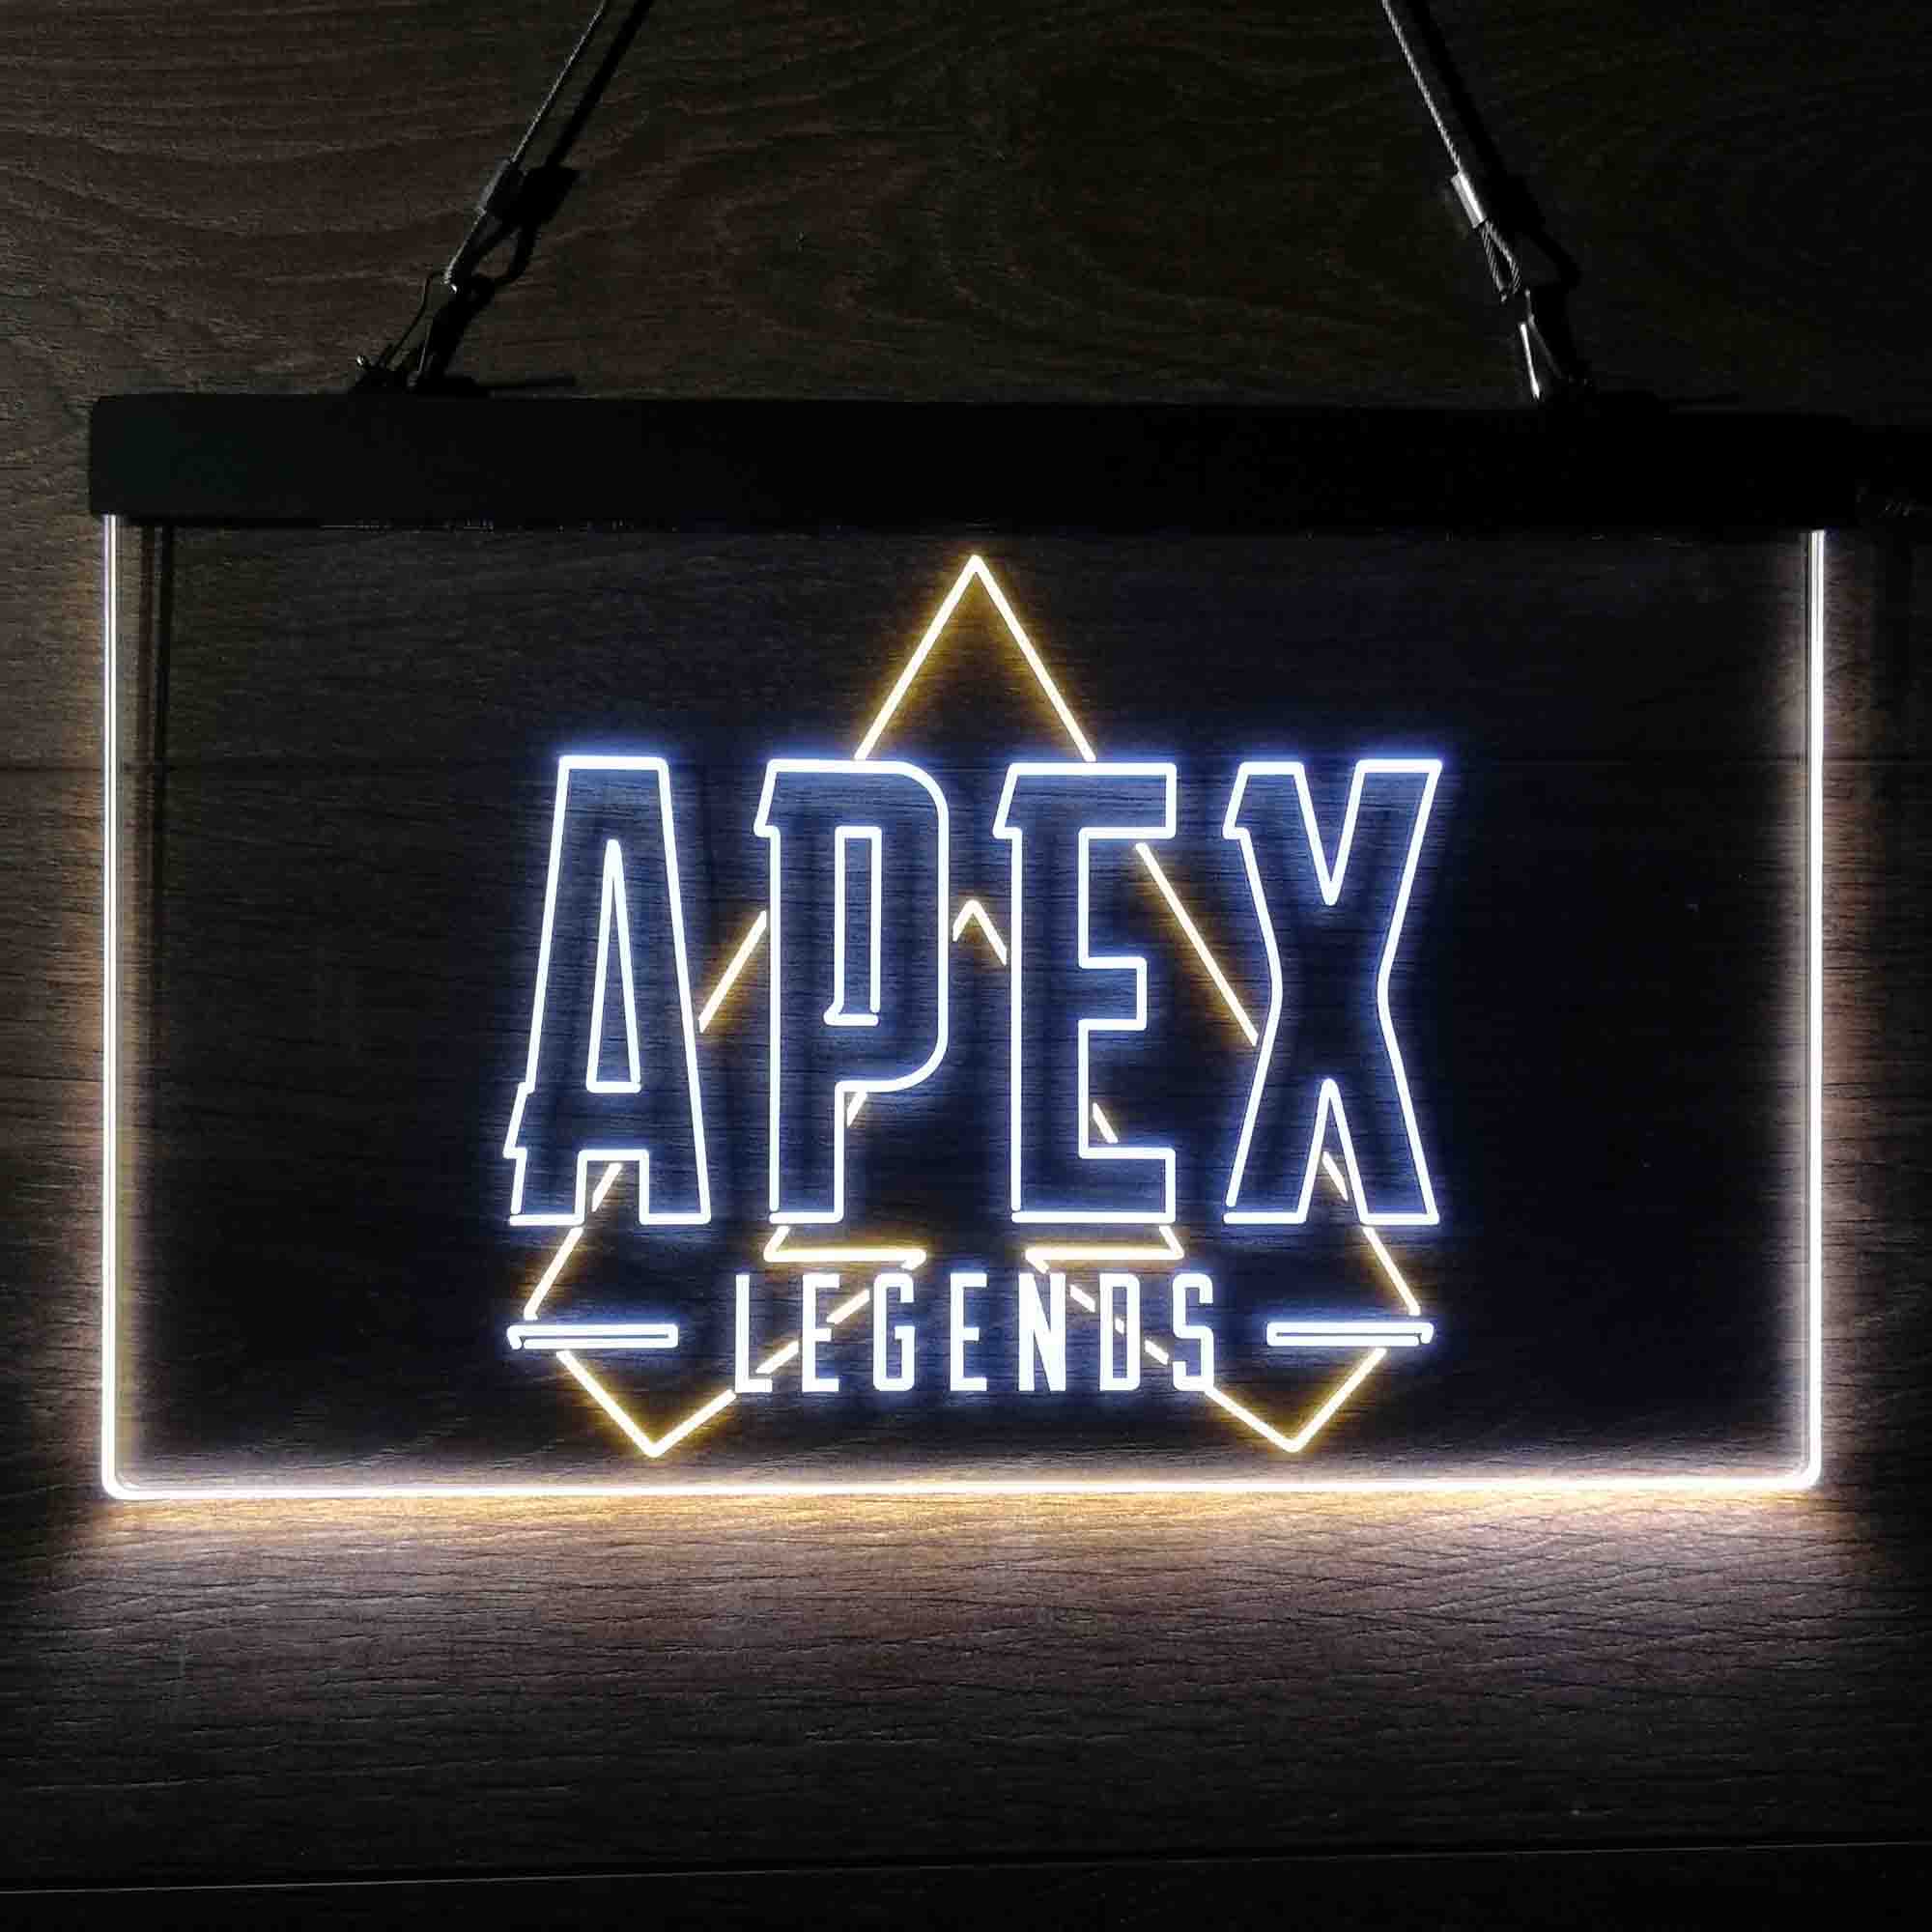 APEX Legends Gamertag Night Light LED Sign